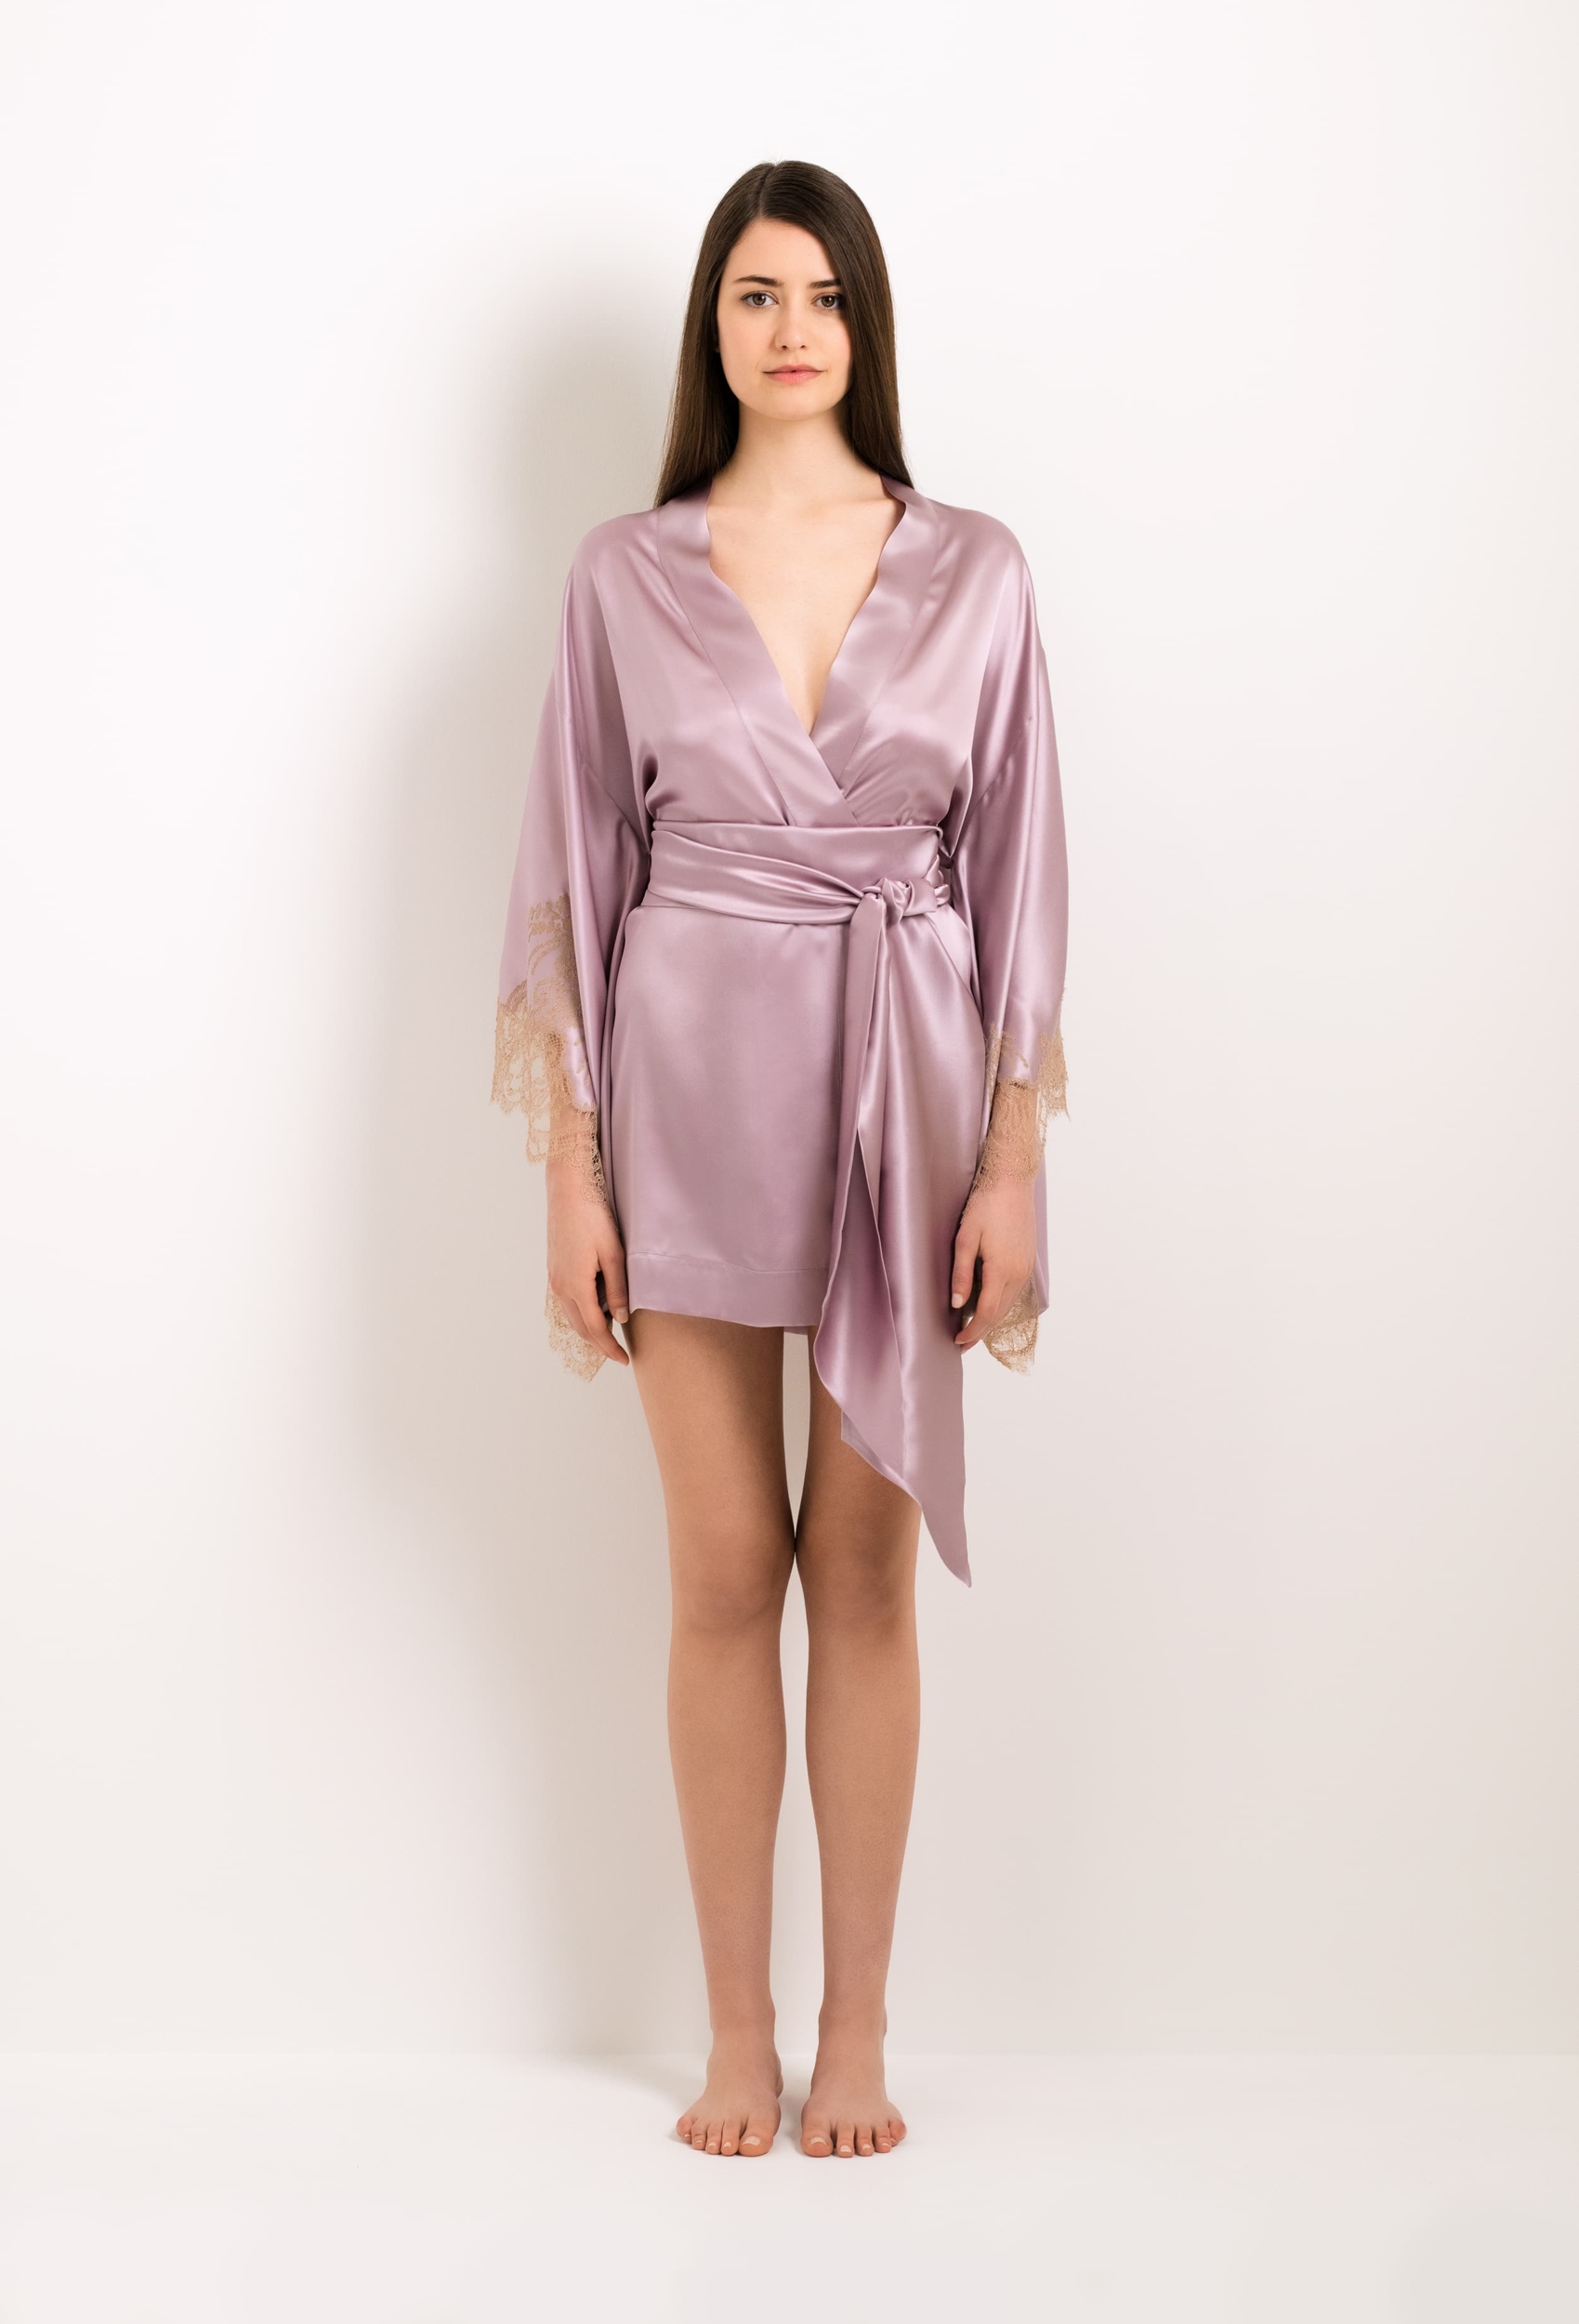 Short silk kimono - lilac and golden Venise Caudry lace - Carine Gilson